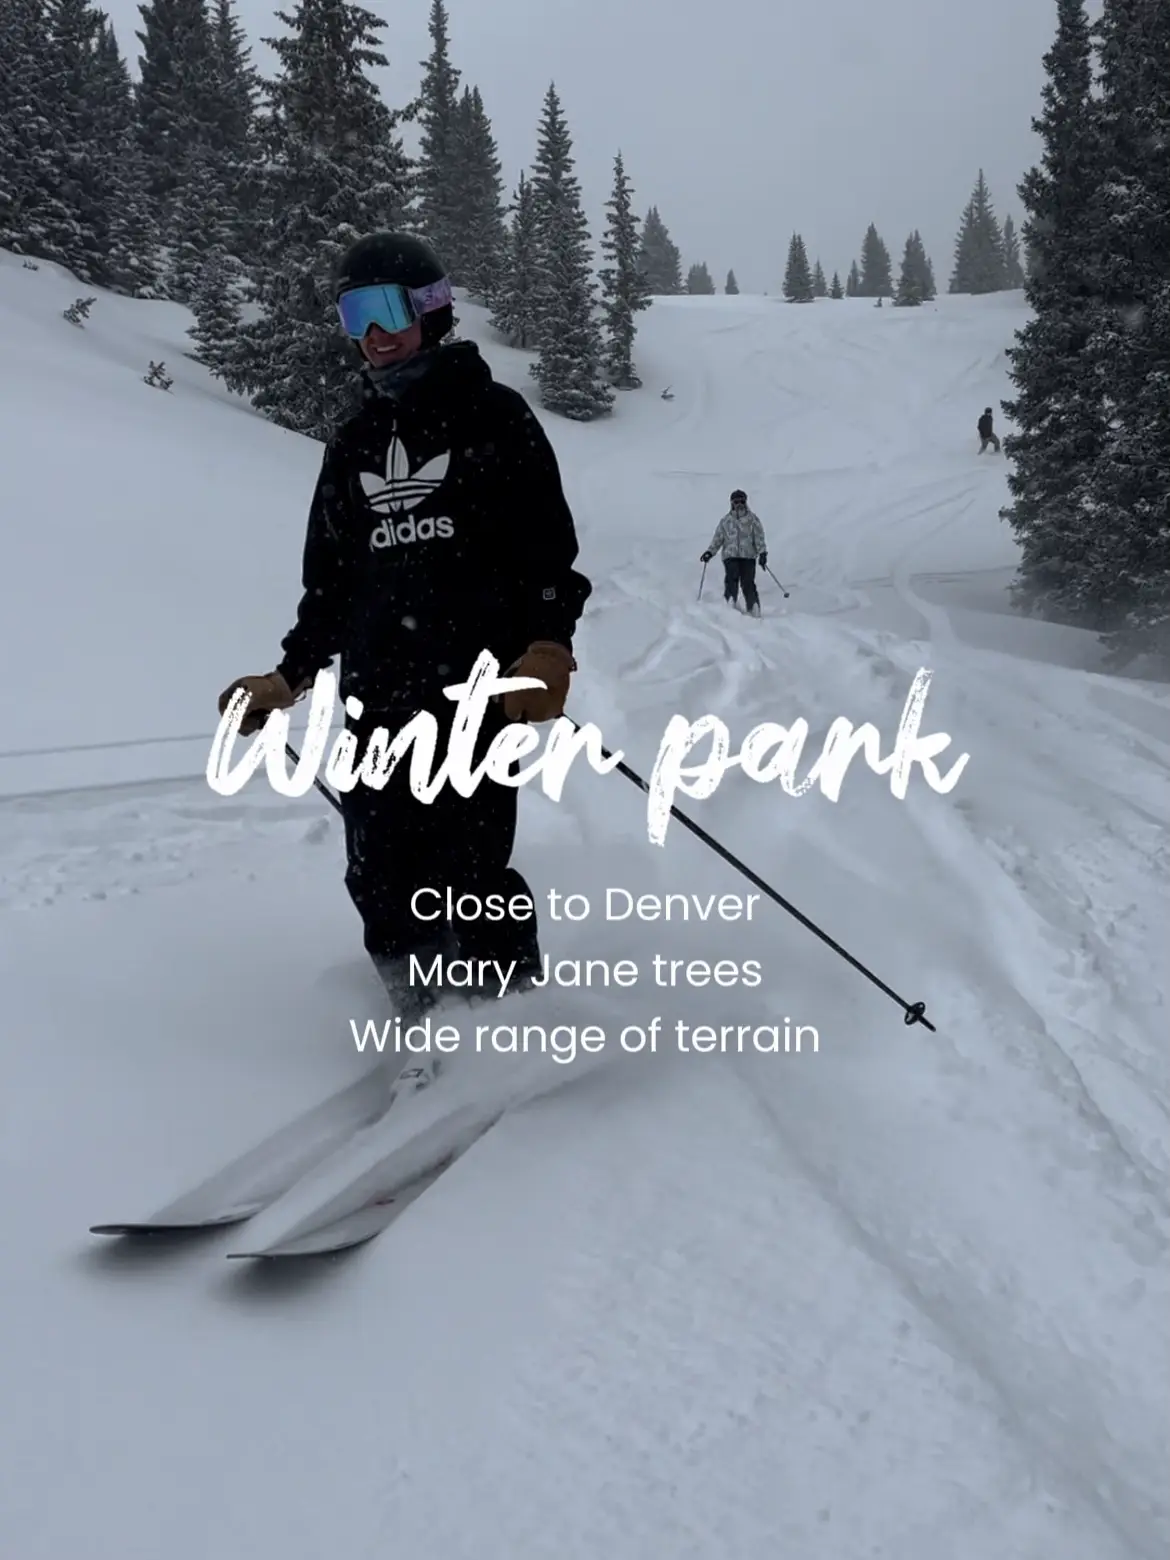 Premium Photo  Skiers sliding down snowy slope on mountain at winter resort